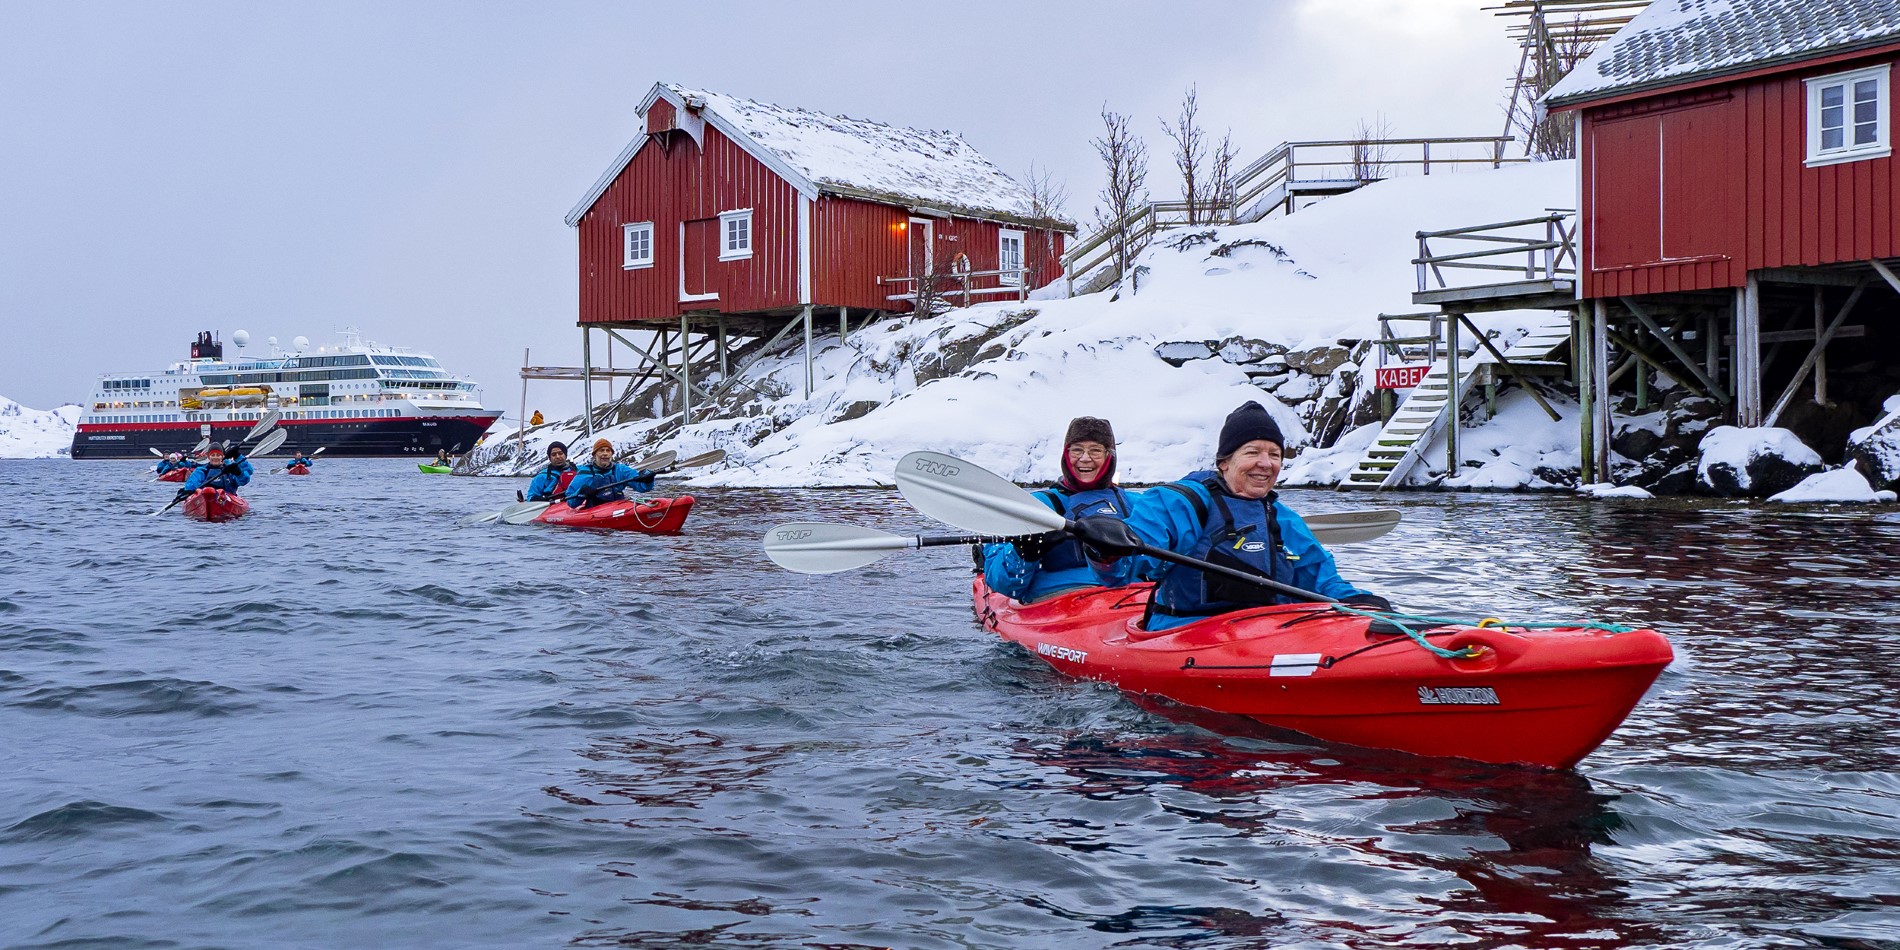 Kayaking in Reine, Norway